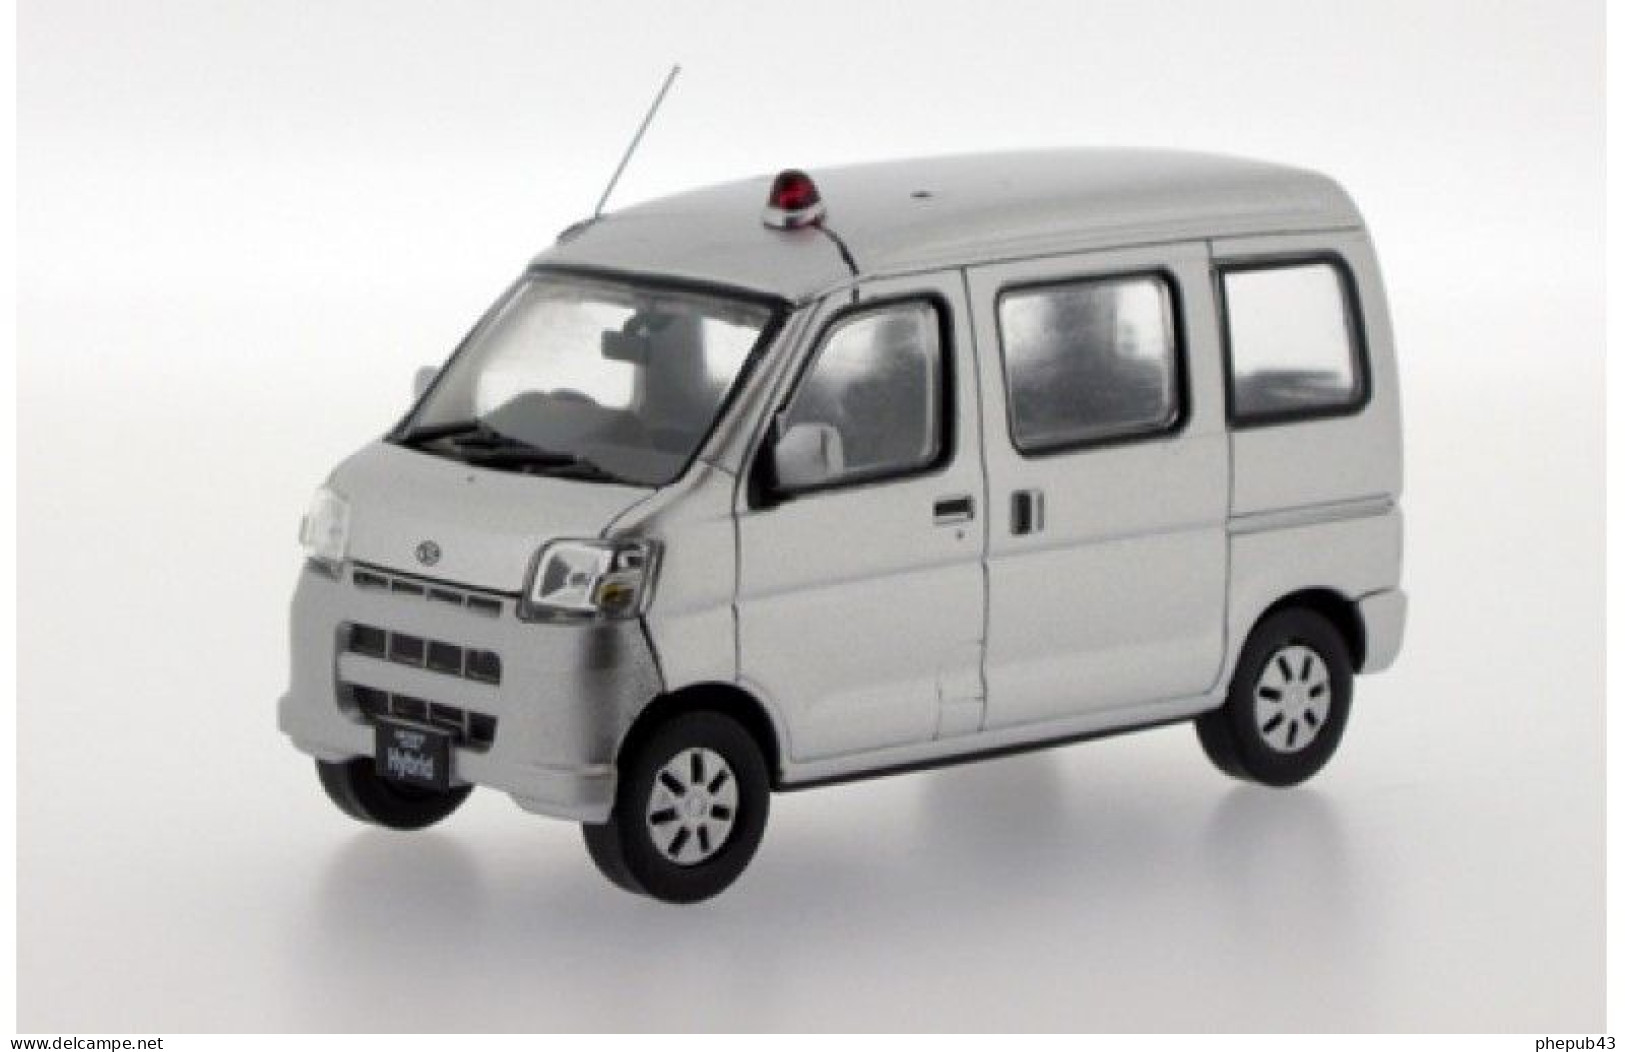 Daihatsu Hijet - Japan Unmarked Police Car - 2009 - White - J-Collection - Ixo